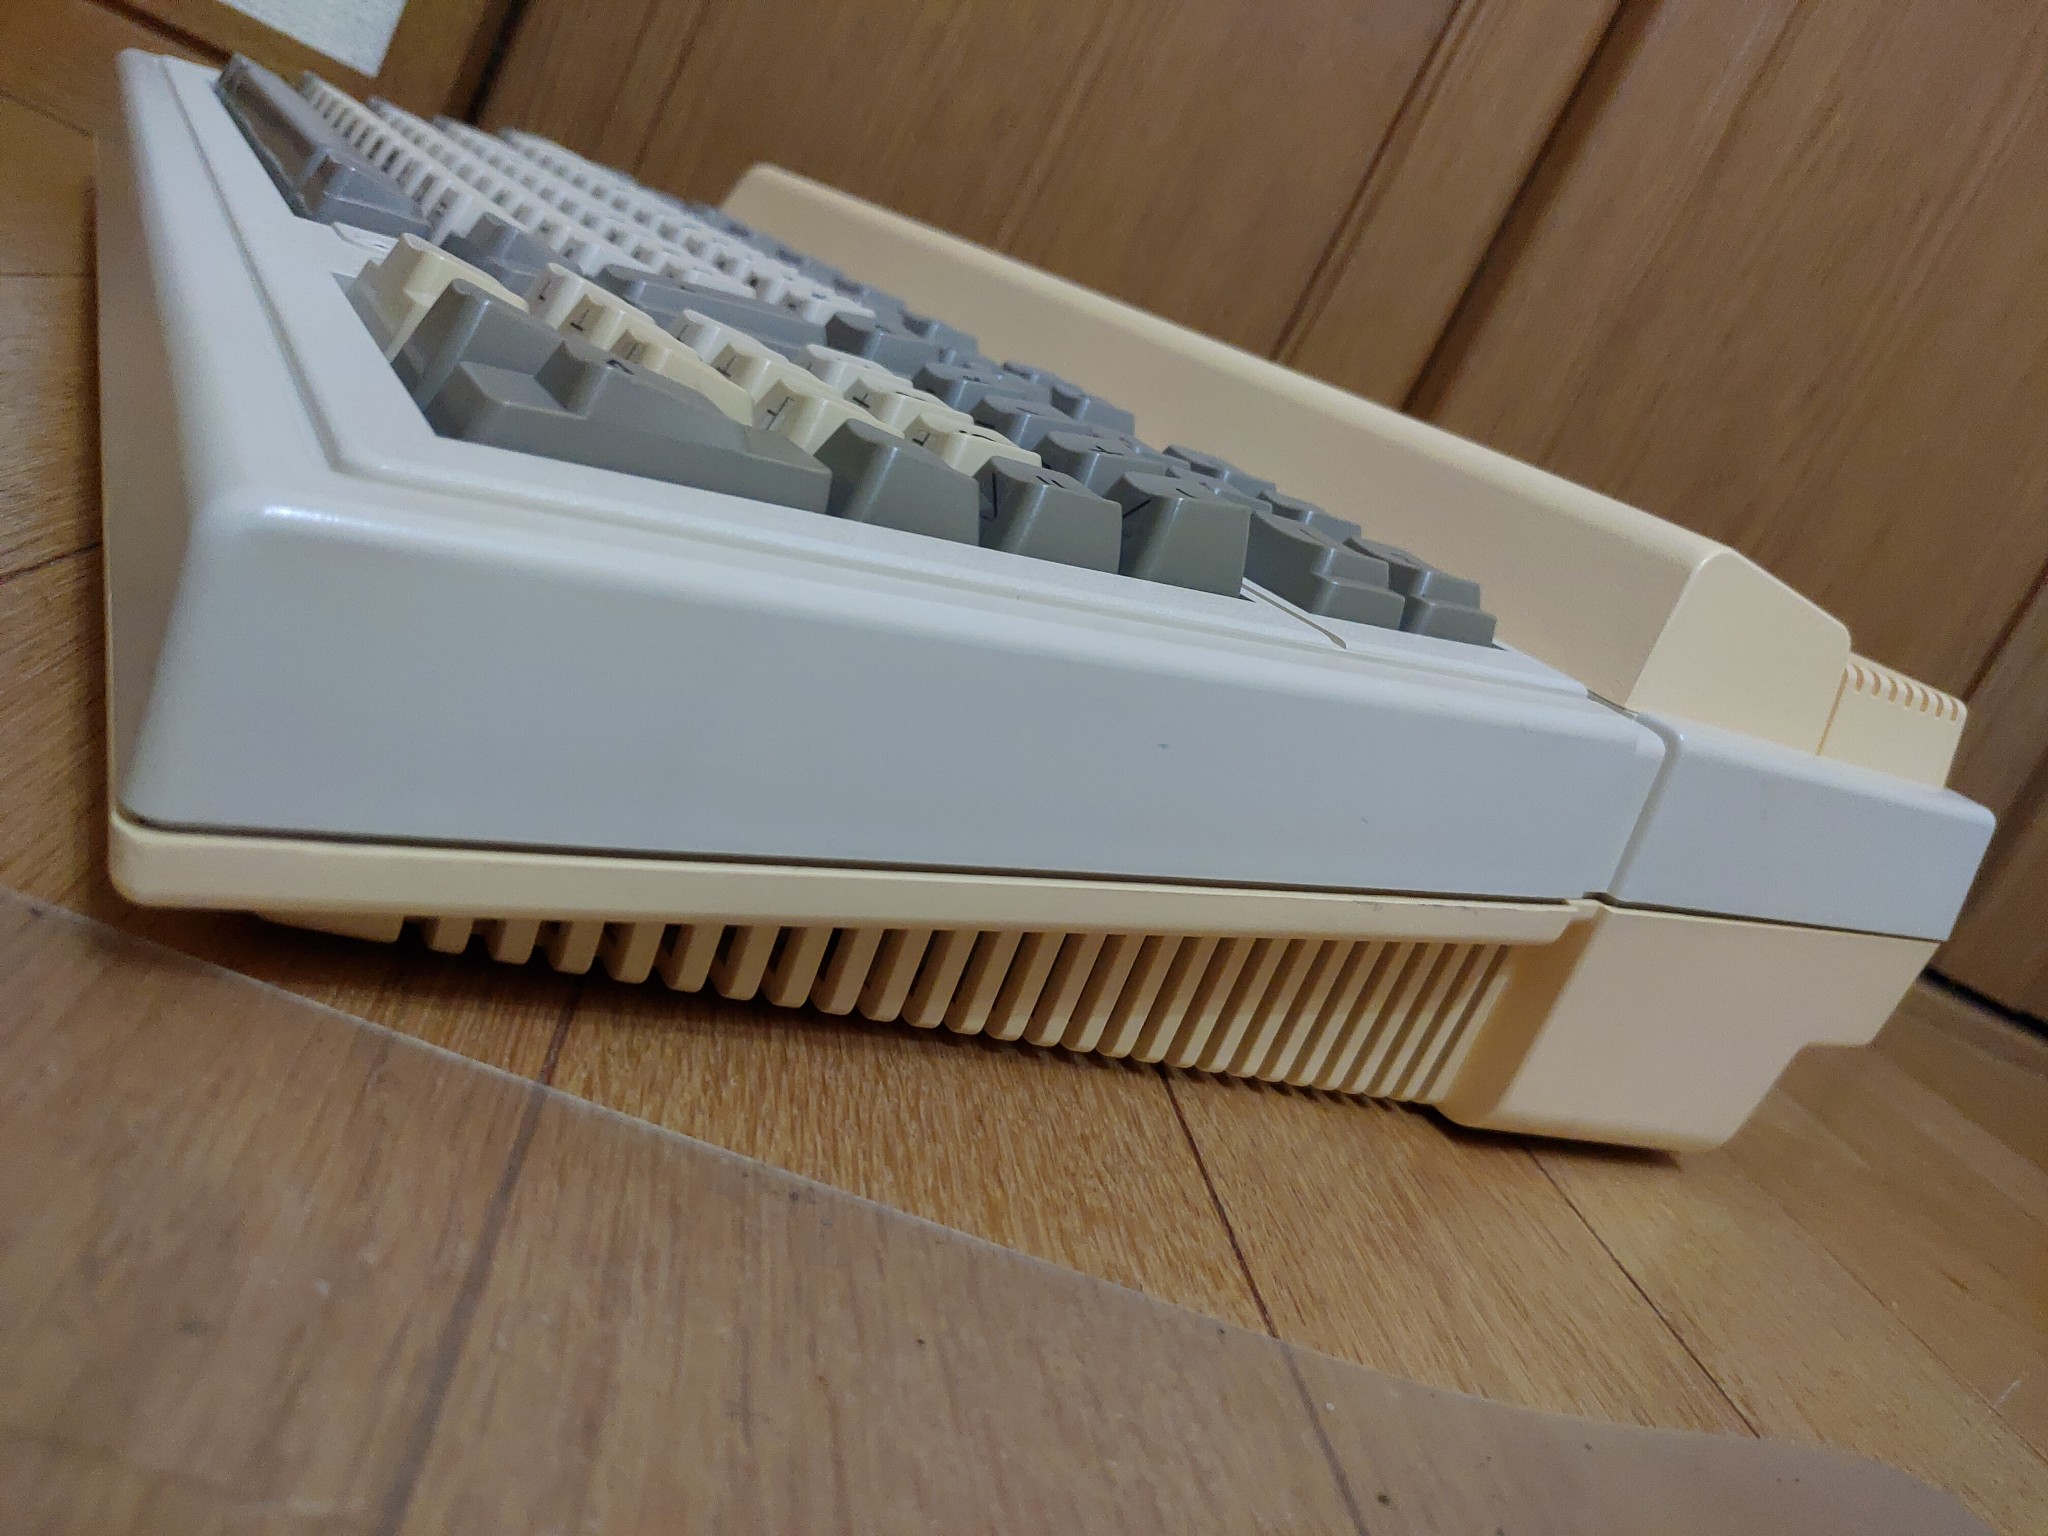 Fujitsu FM‐NEW7 – Japanese Vintage Computer Collection